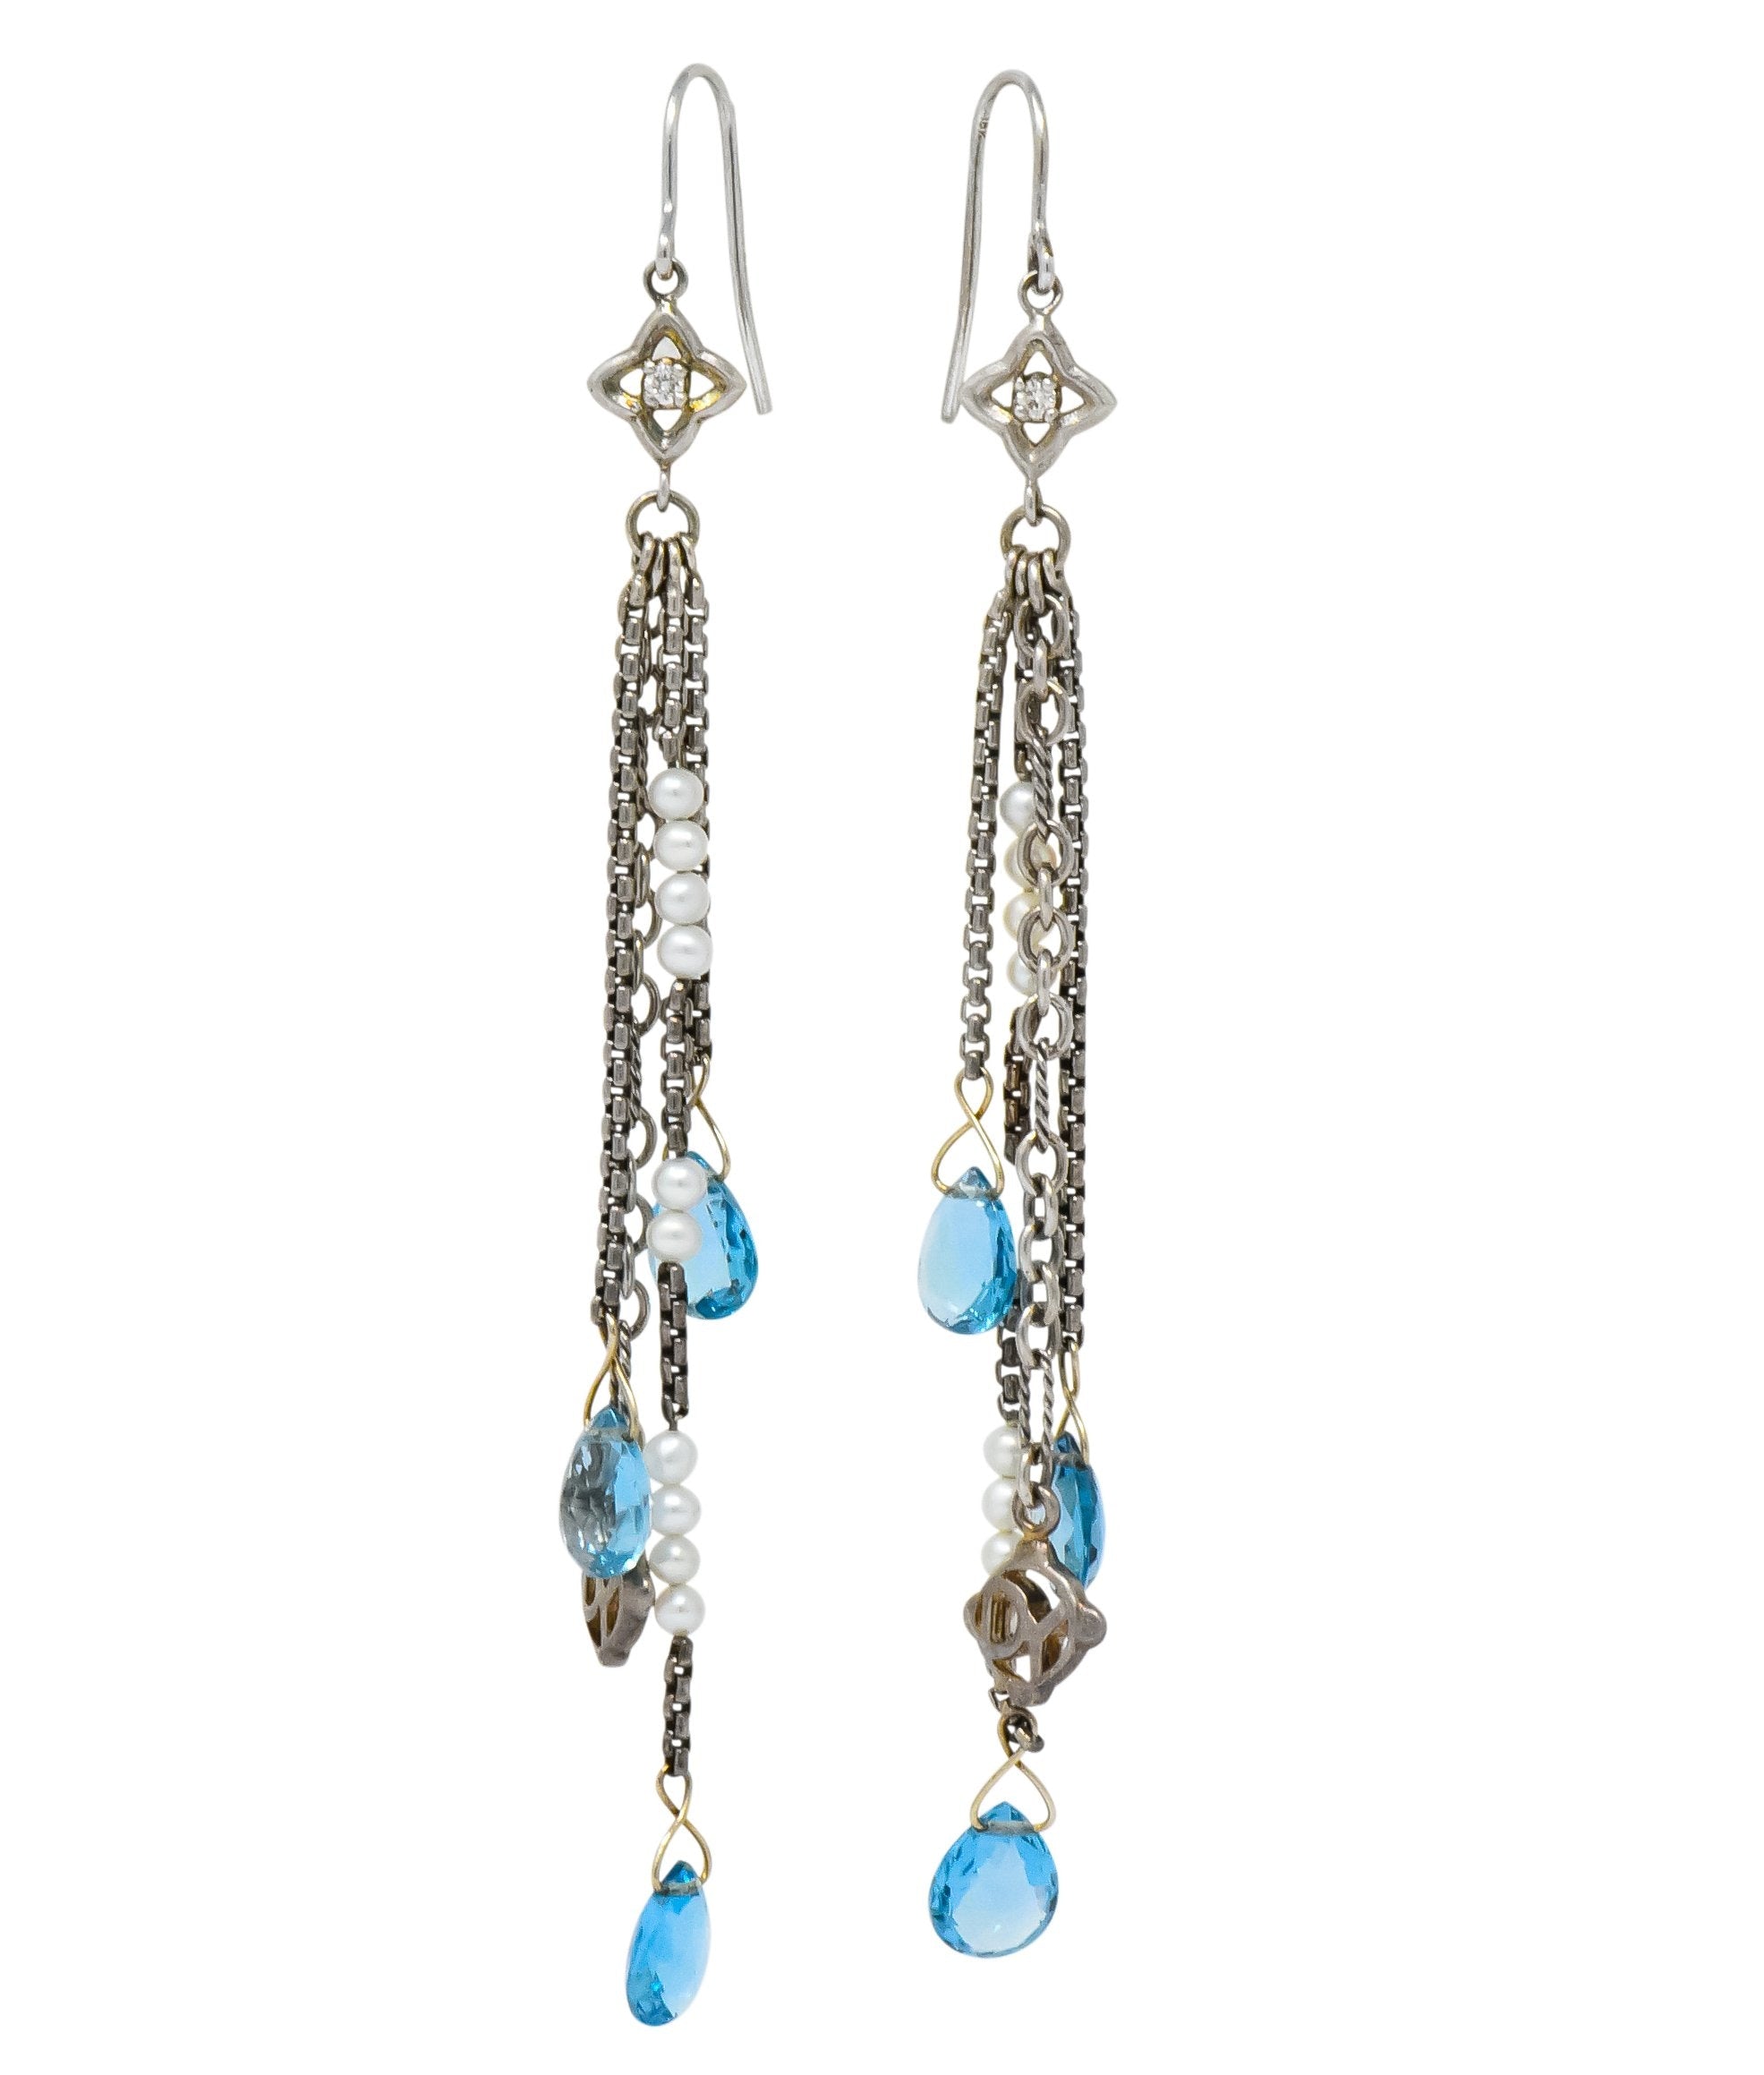 David Yurman Chatelaine Stud Earrings with Blue Topaz  Diamonds   Nordstrom